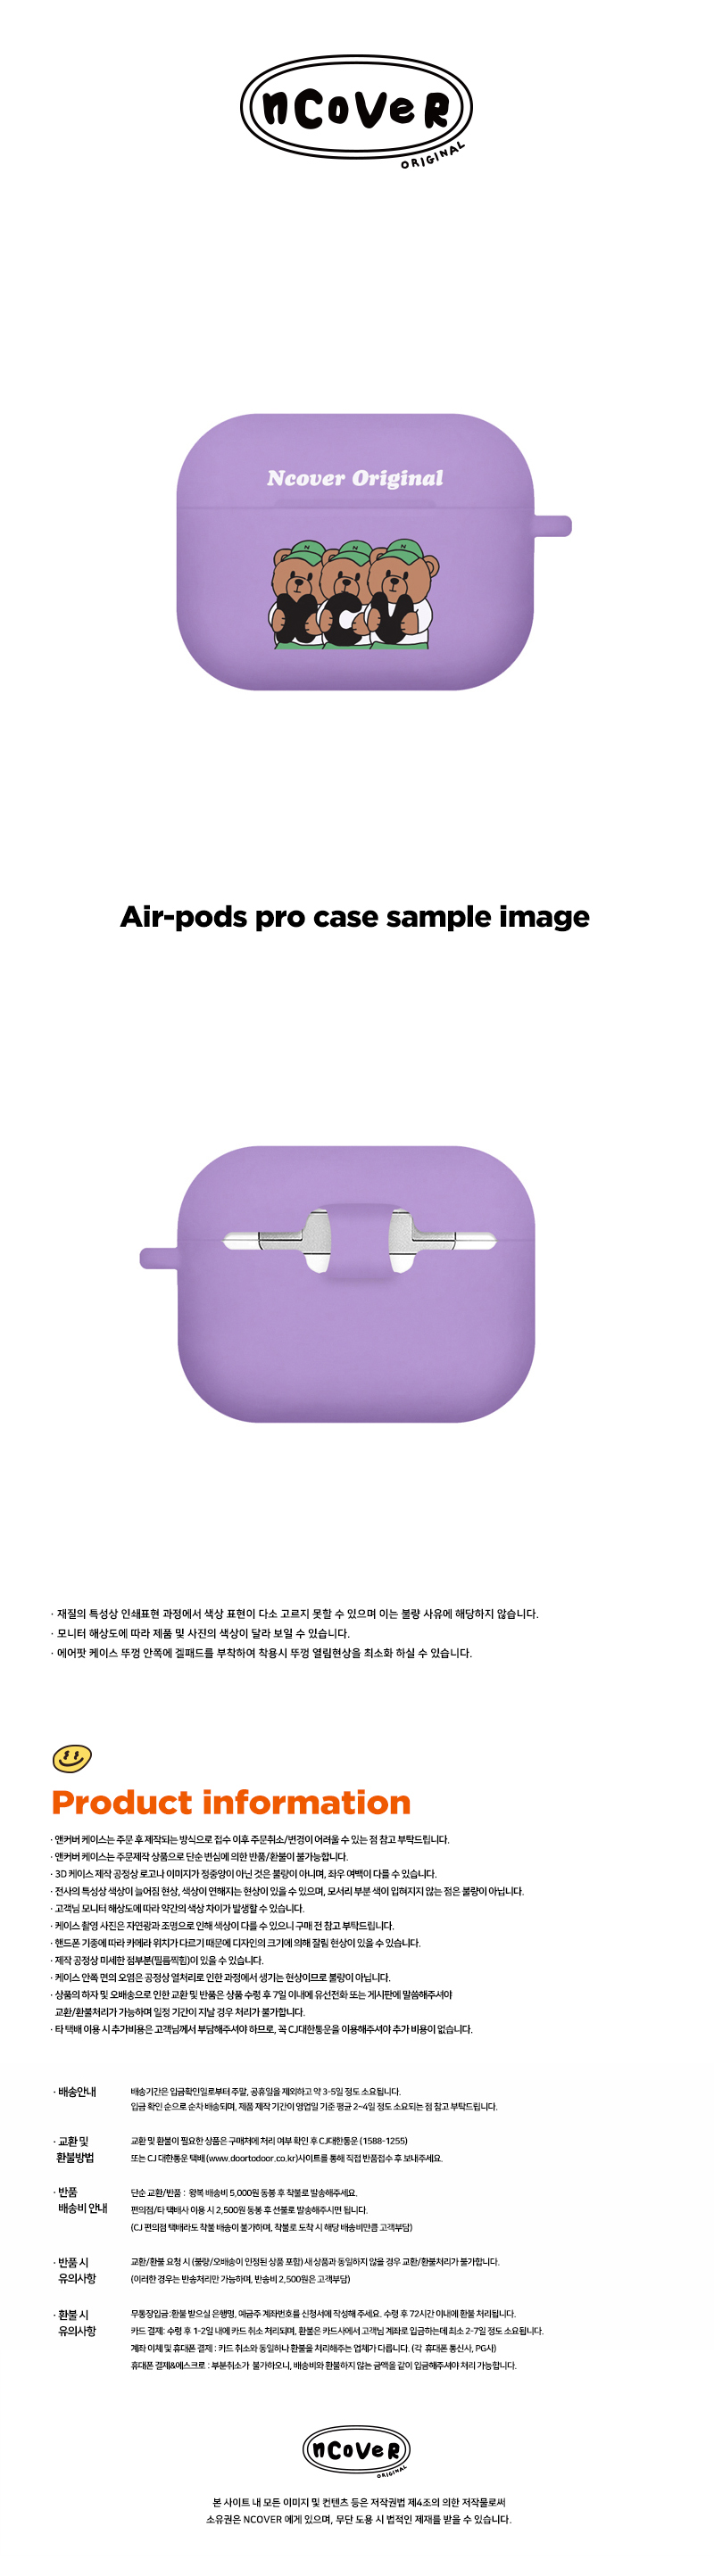  Ncv alphabet bruin-purple(airpods pro jelly)  15,000원 - 바이인터내셔널주식회사 디지털, 이어폰/헤드폰, 이어폰/헤드폰 액세서리, 에어팟/에어팟프로 케이스 바보사랑  Ncv alphabet bruin-purple(airpods pro jelly)  15,000원 - 바이인터내셔널주식회사 디지털, 이어폰/헤드폰, 이어폰/헤드폰 액세서리, 에어팟/에어팟프로 케이스 바보사랑